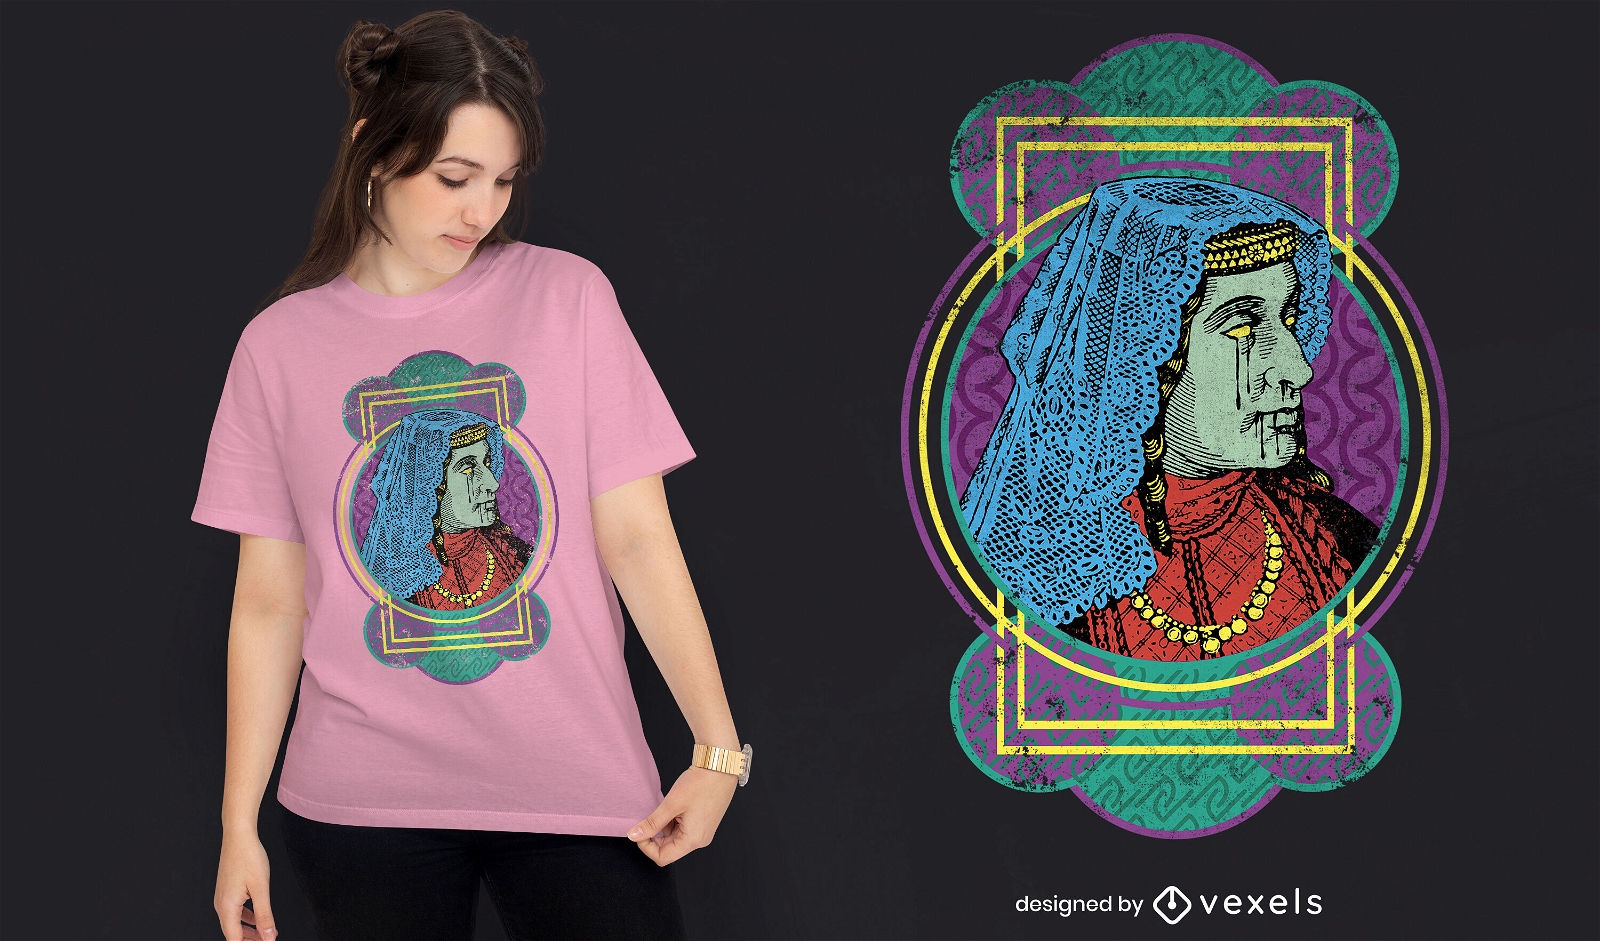 Woman with headscarf portrait t-shirt design